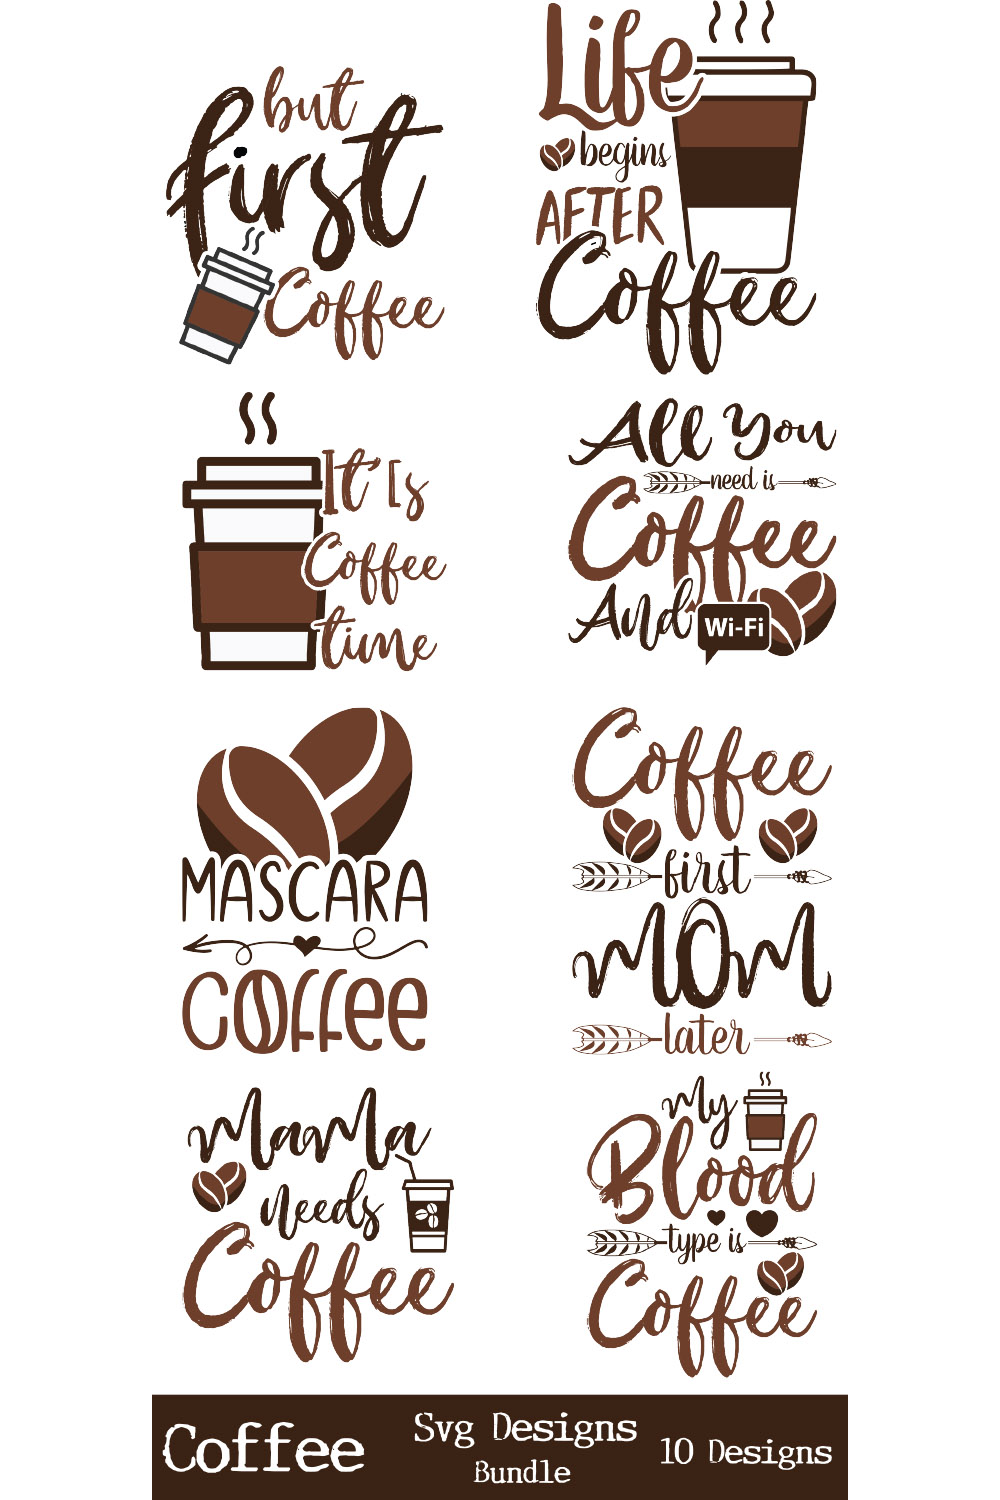 Coffee T-Shirt Designs Bundle - Pinterest.